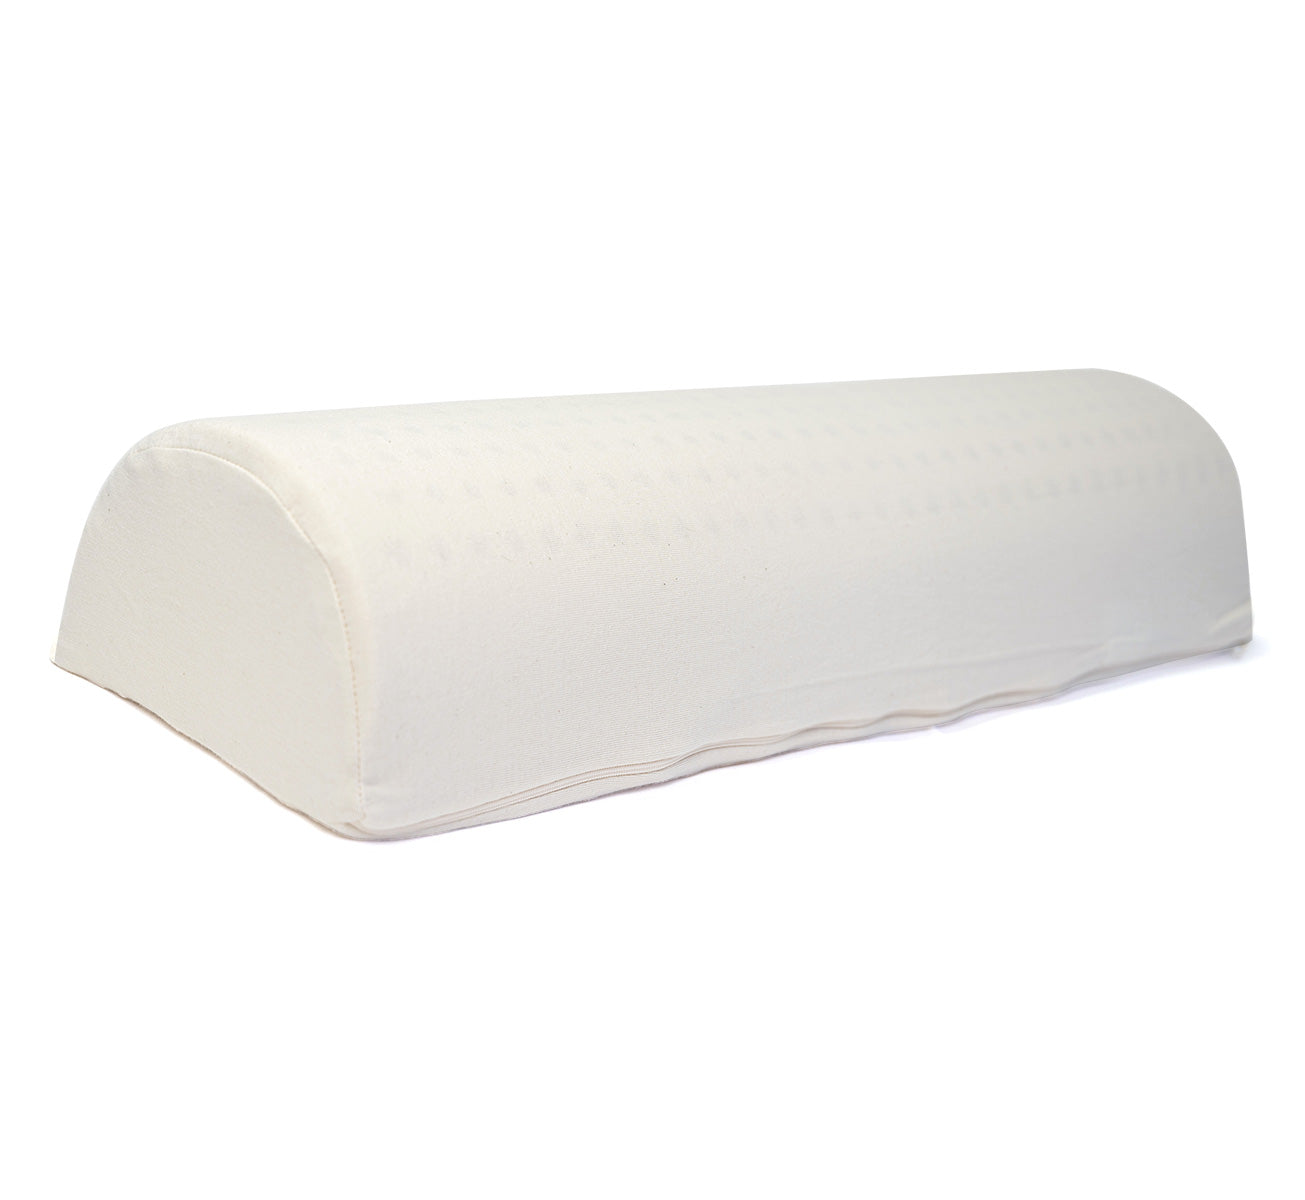 COMFILIFE Memory Foam Half Moon Bolster Pillow R-BOS-117 - The Home Depot